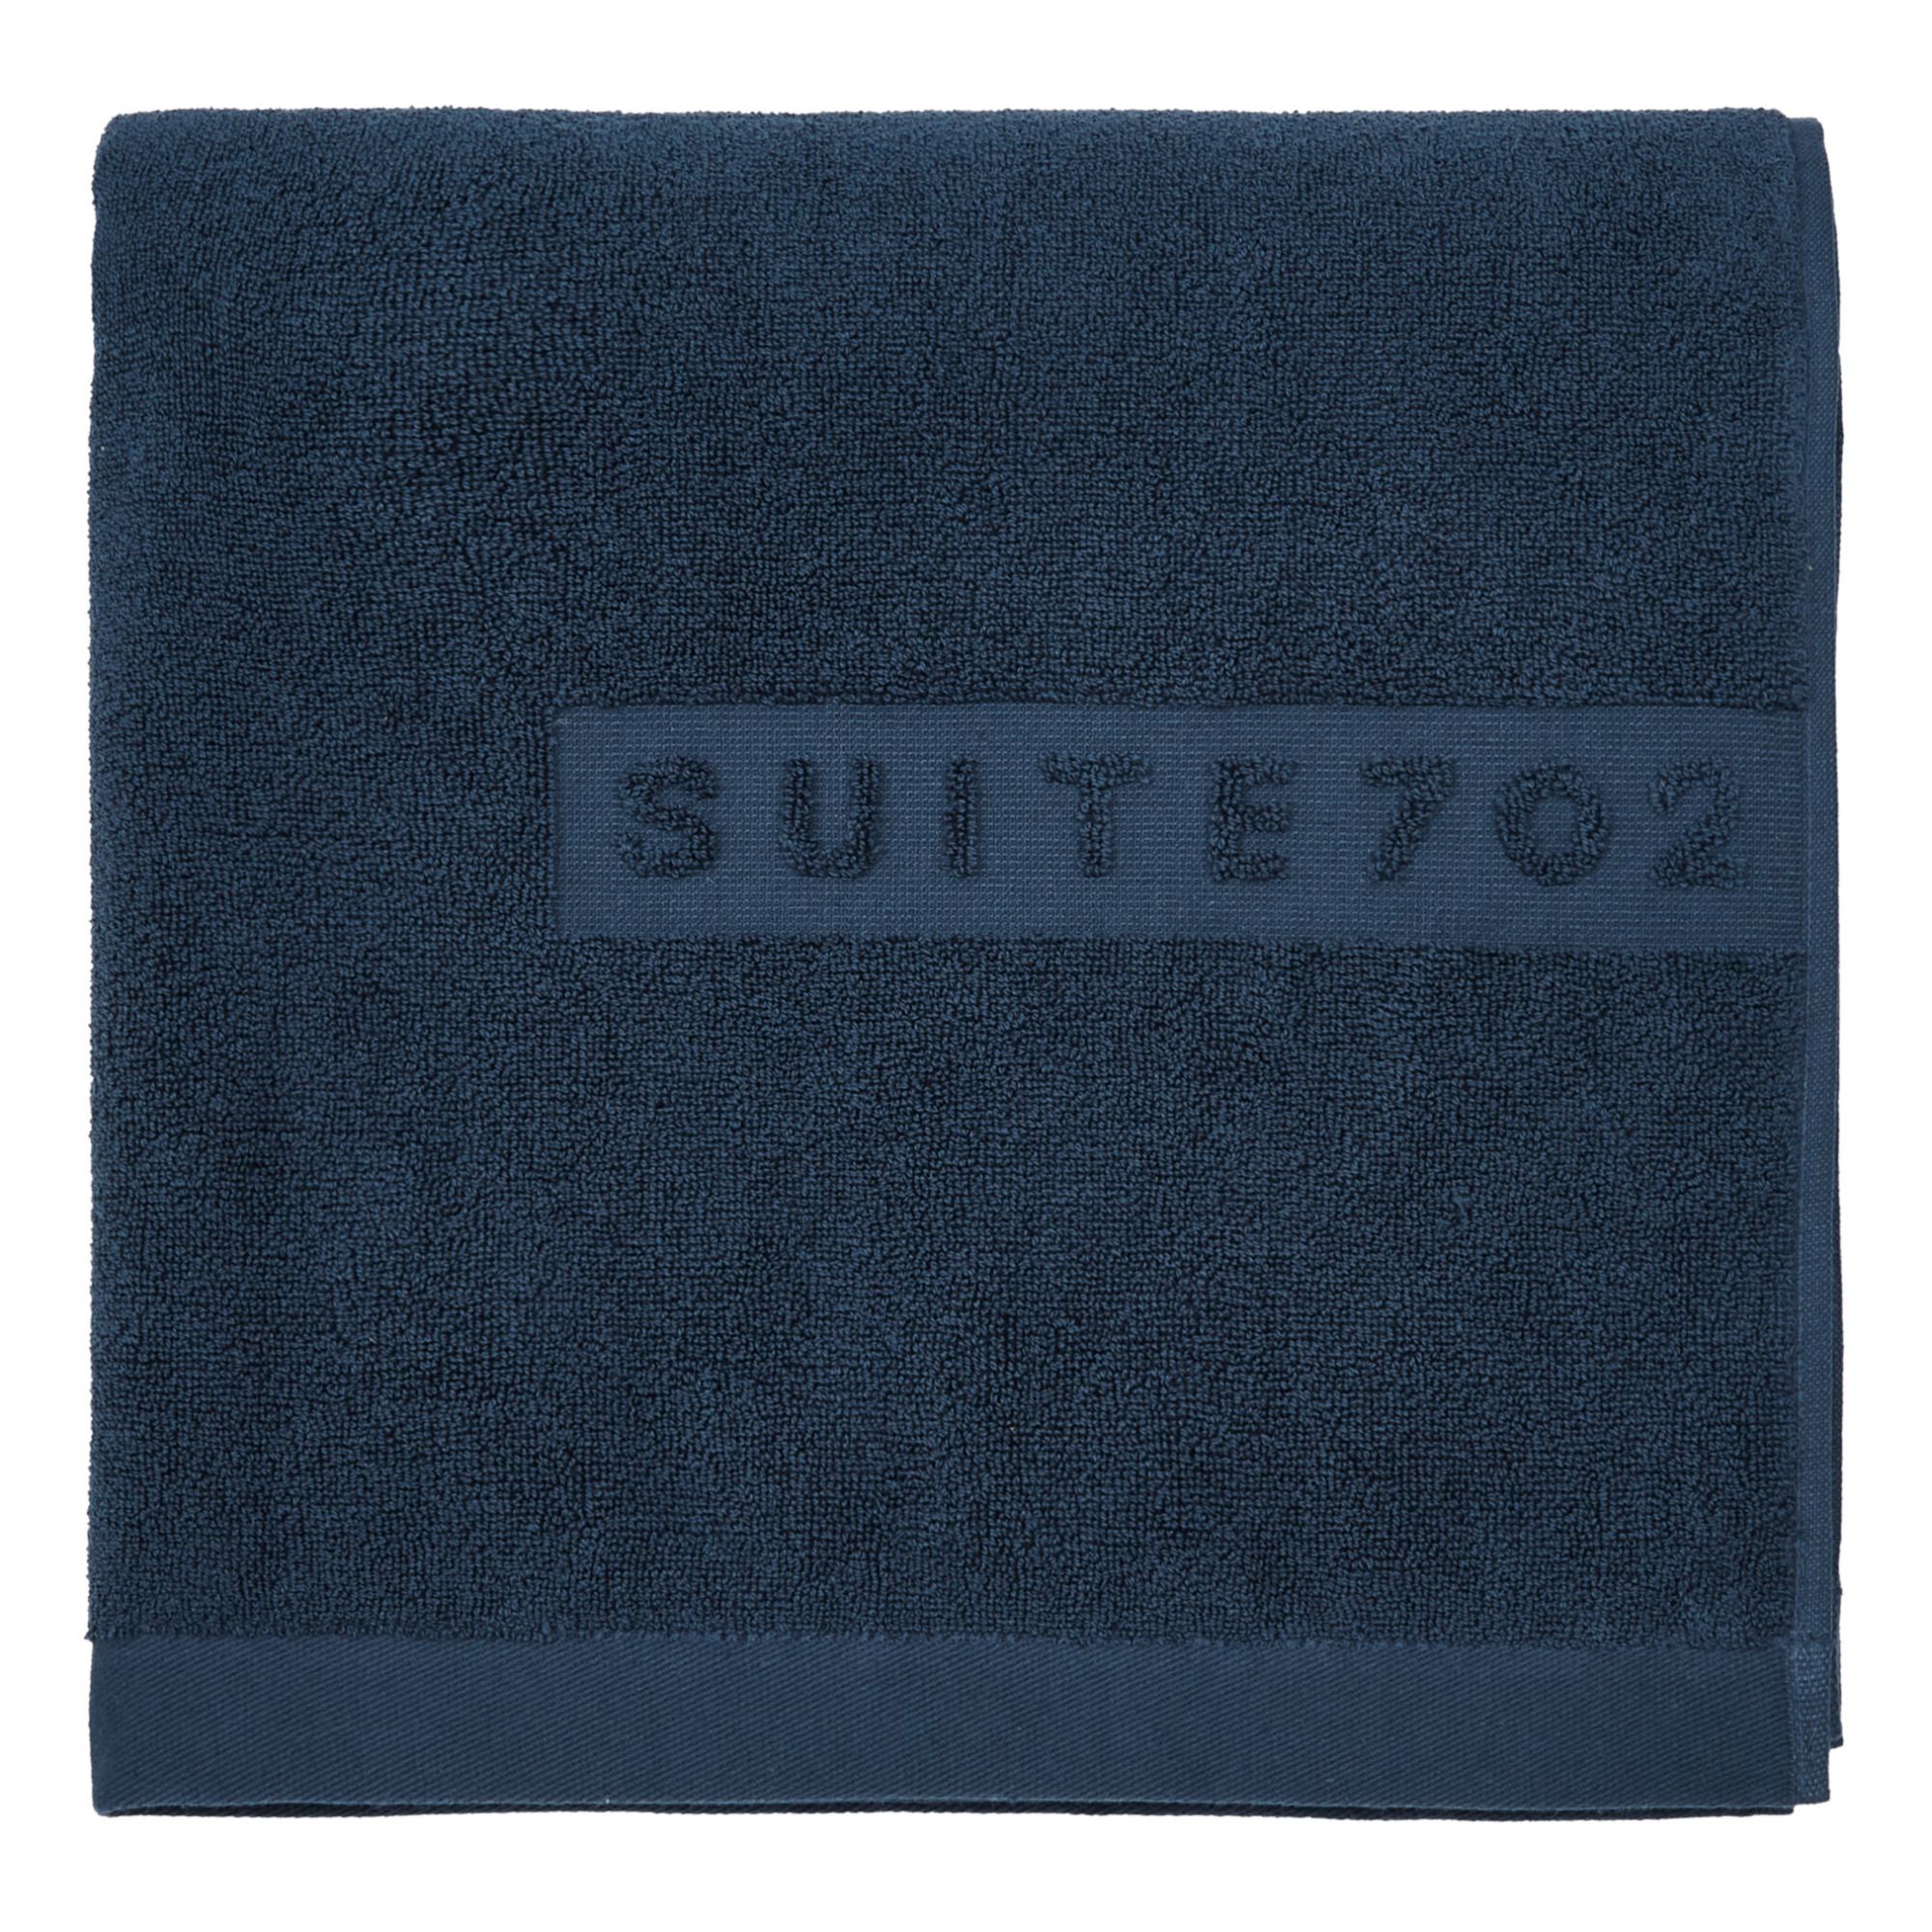 Suite 702 - Drap de bain en coton bio - Bleu marine